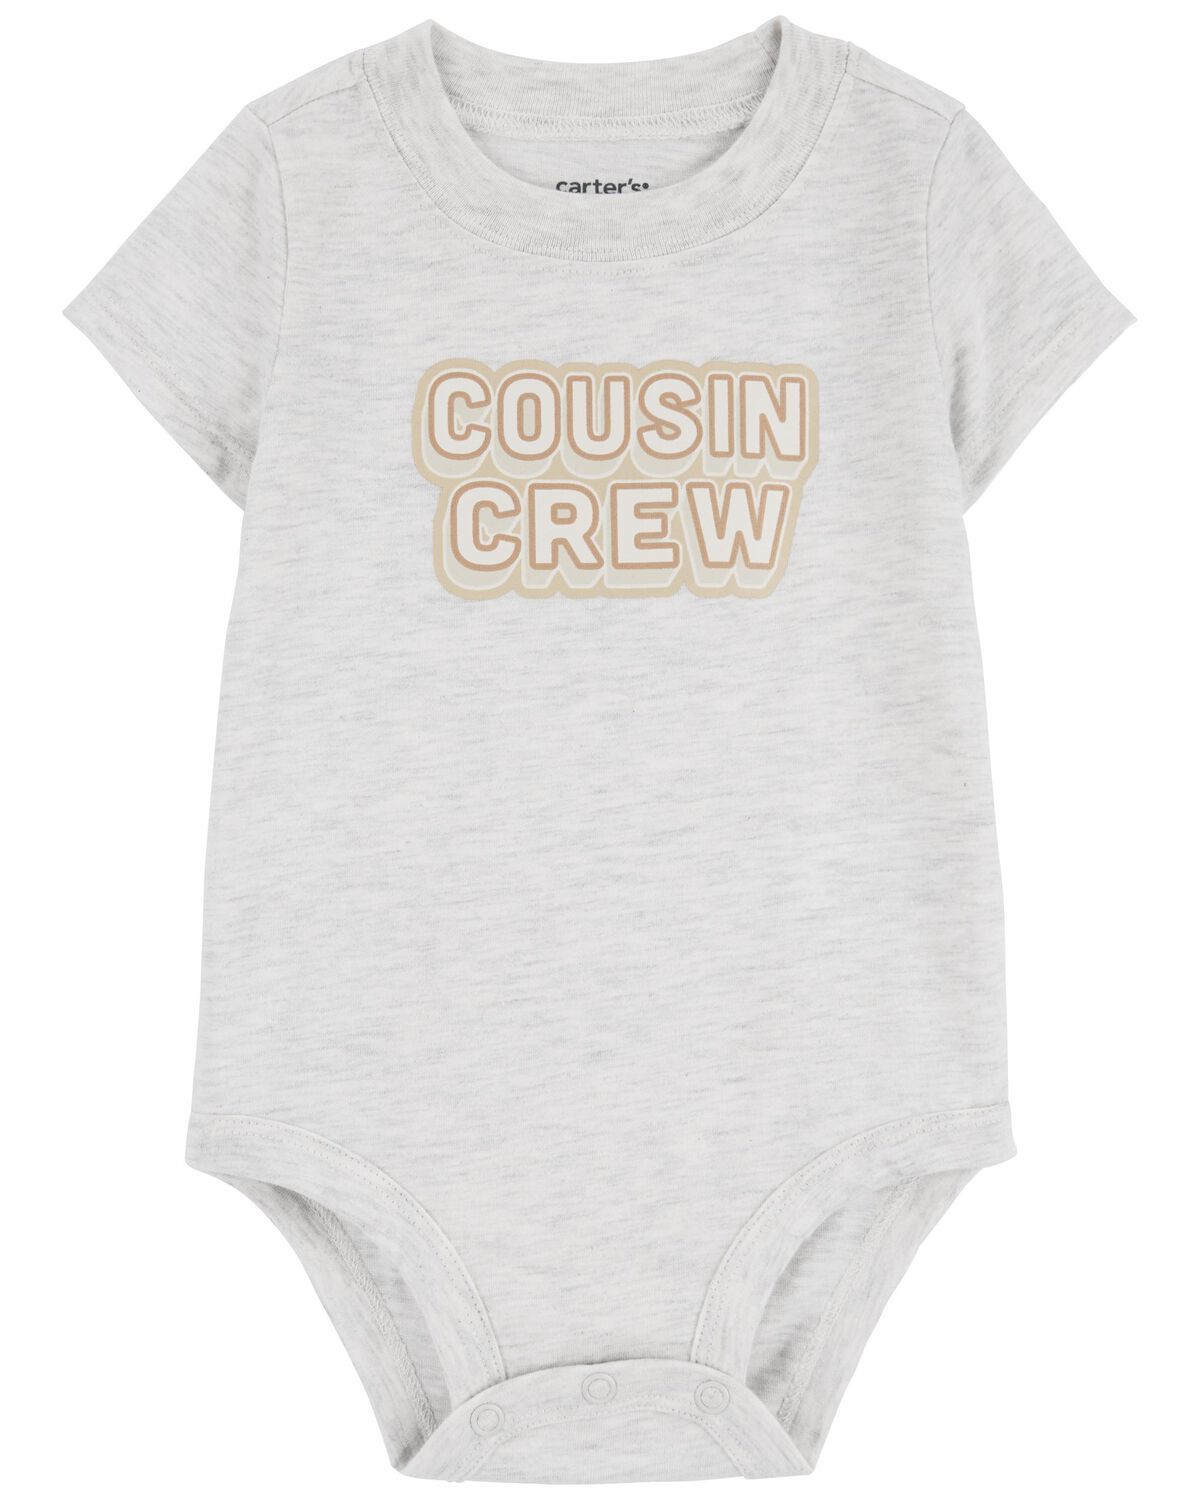 Baby Cousin Crew Bodysuit | Carter's